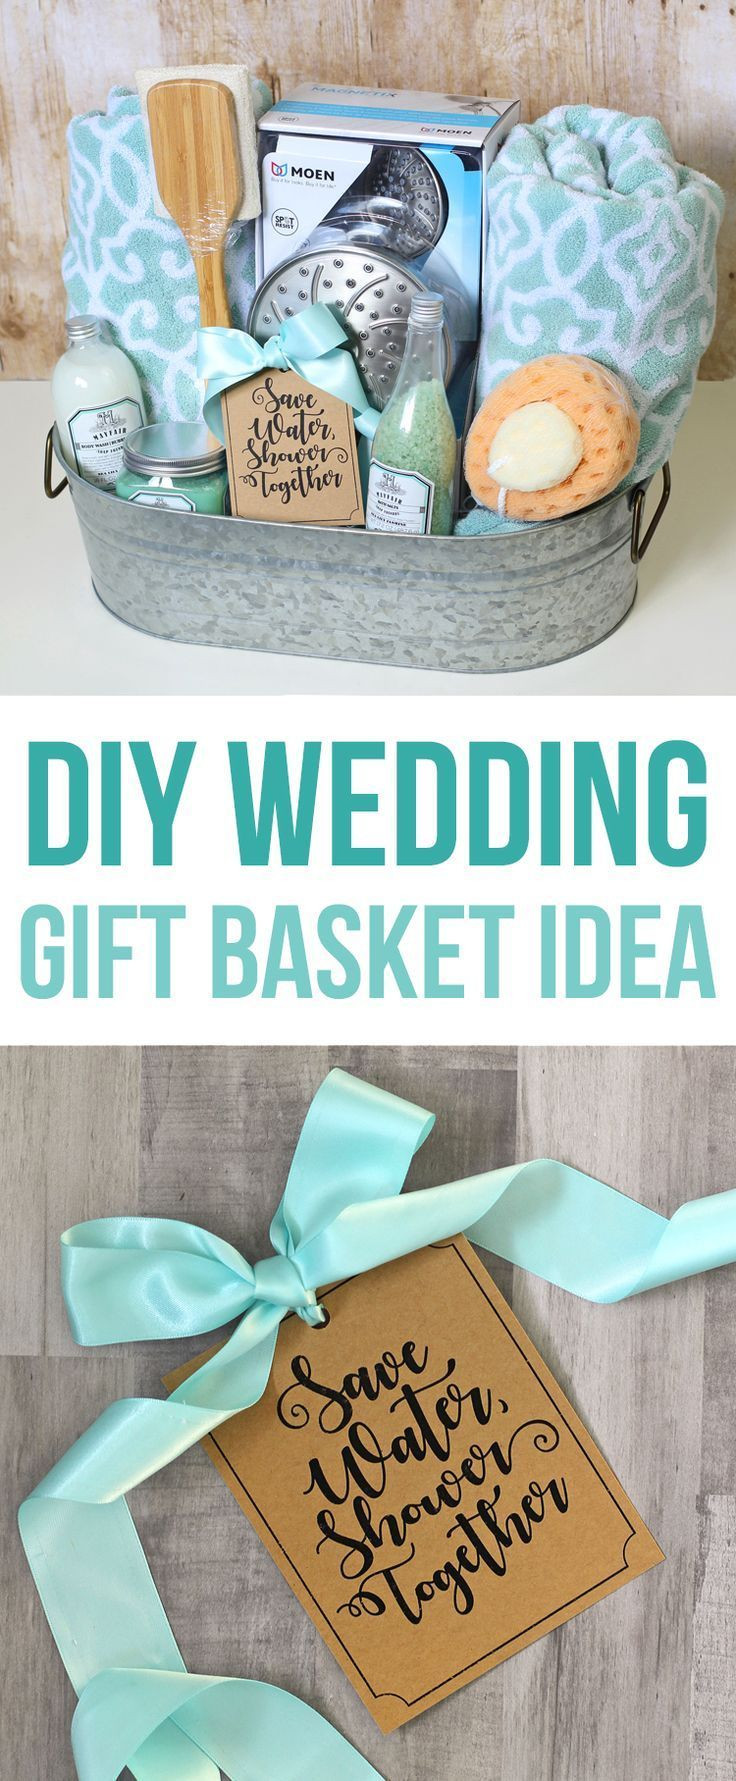 Homemade Wedding Gift Basket Ideas
 Shower Themed DIY Wedding Gift Basket Idea